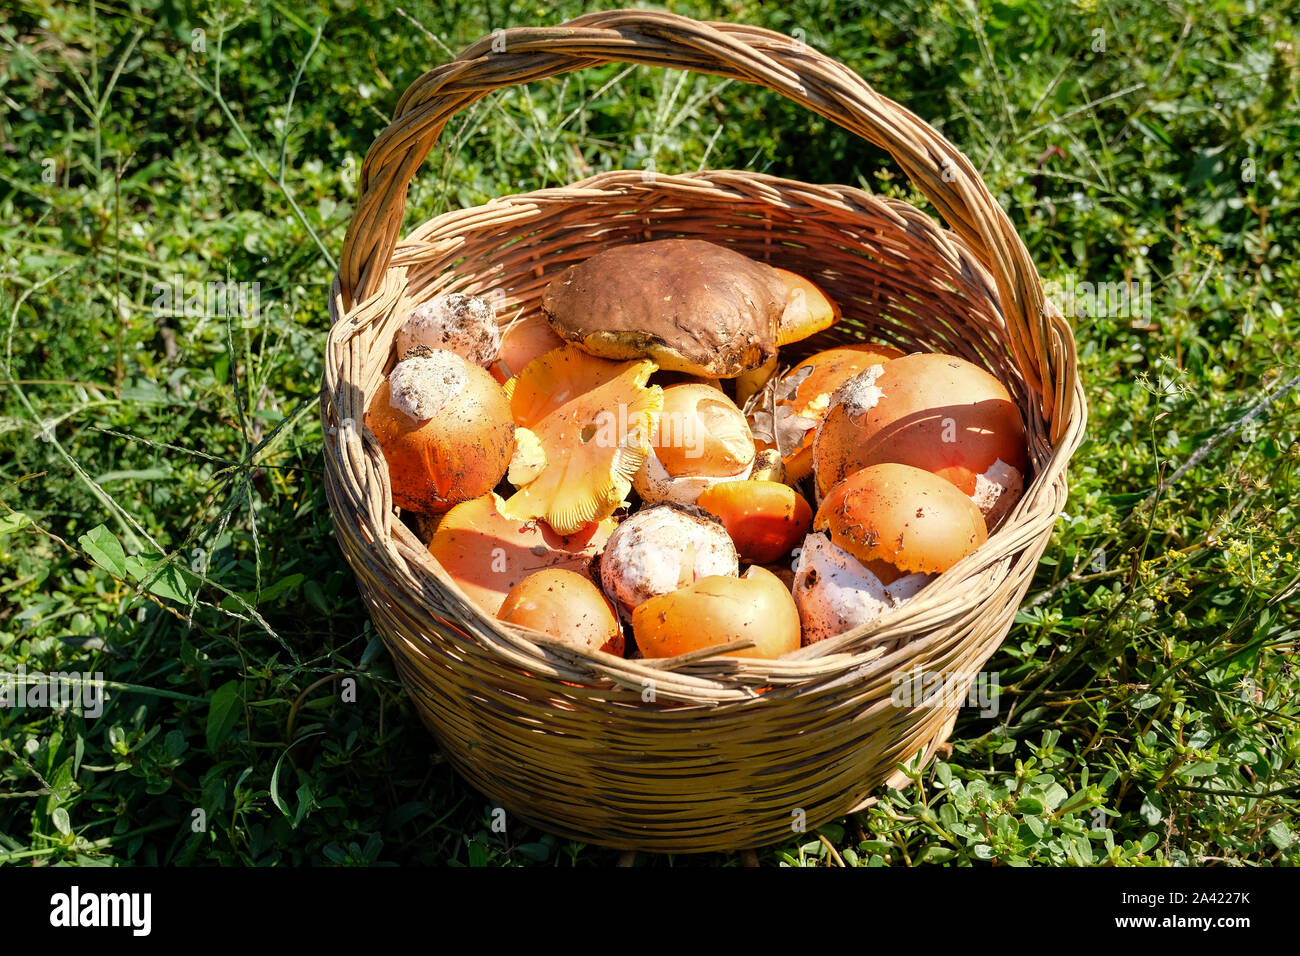 Seasonal raw mushrooms composition in basket, autumn natural food ingredients Stock Photo